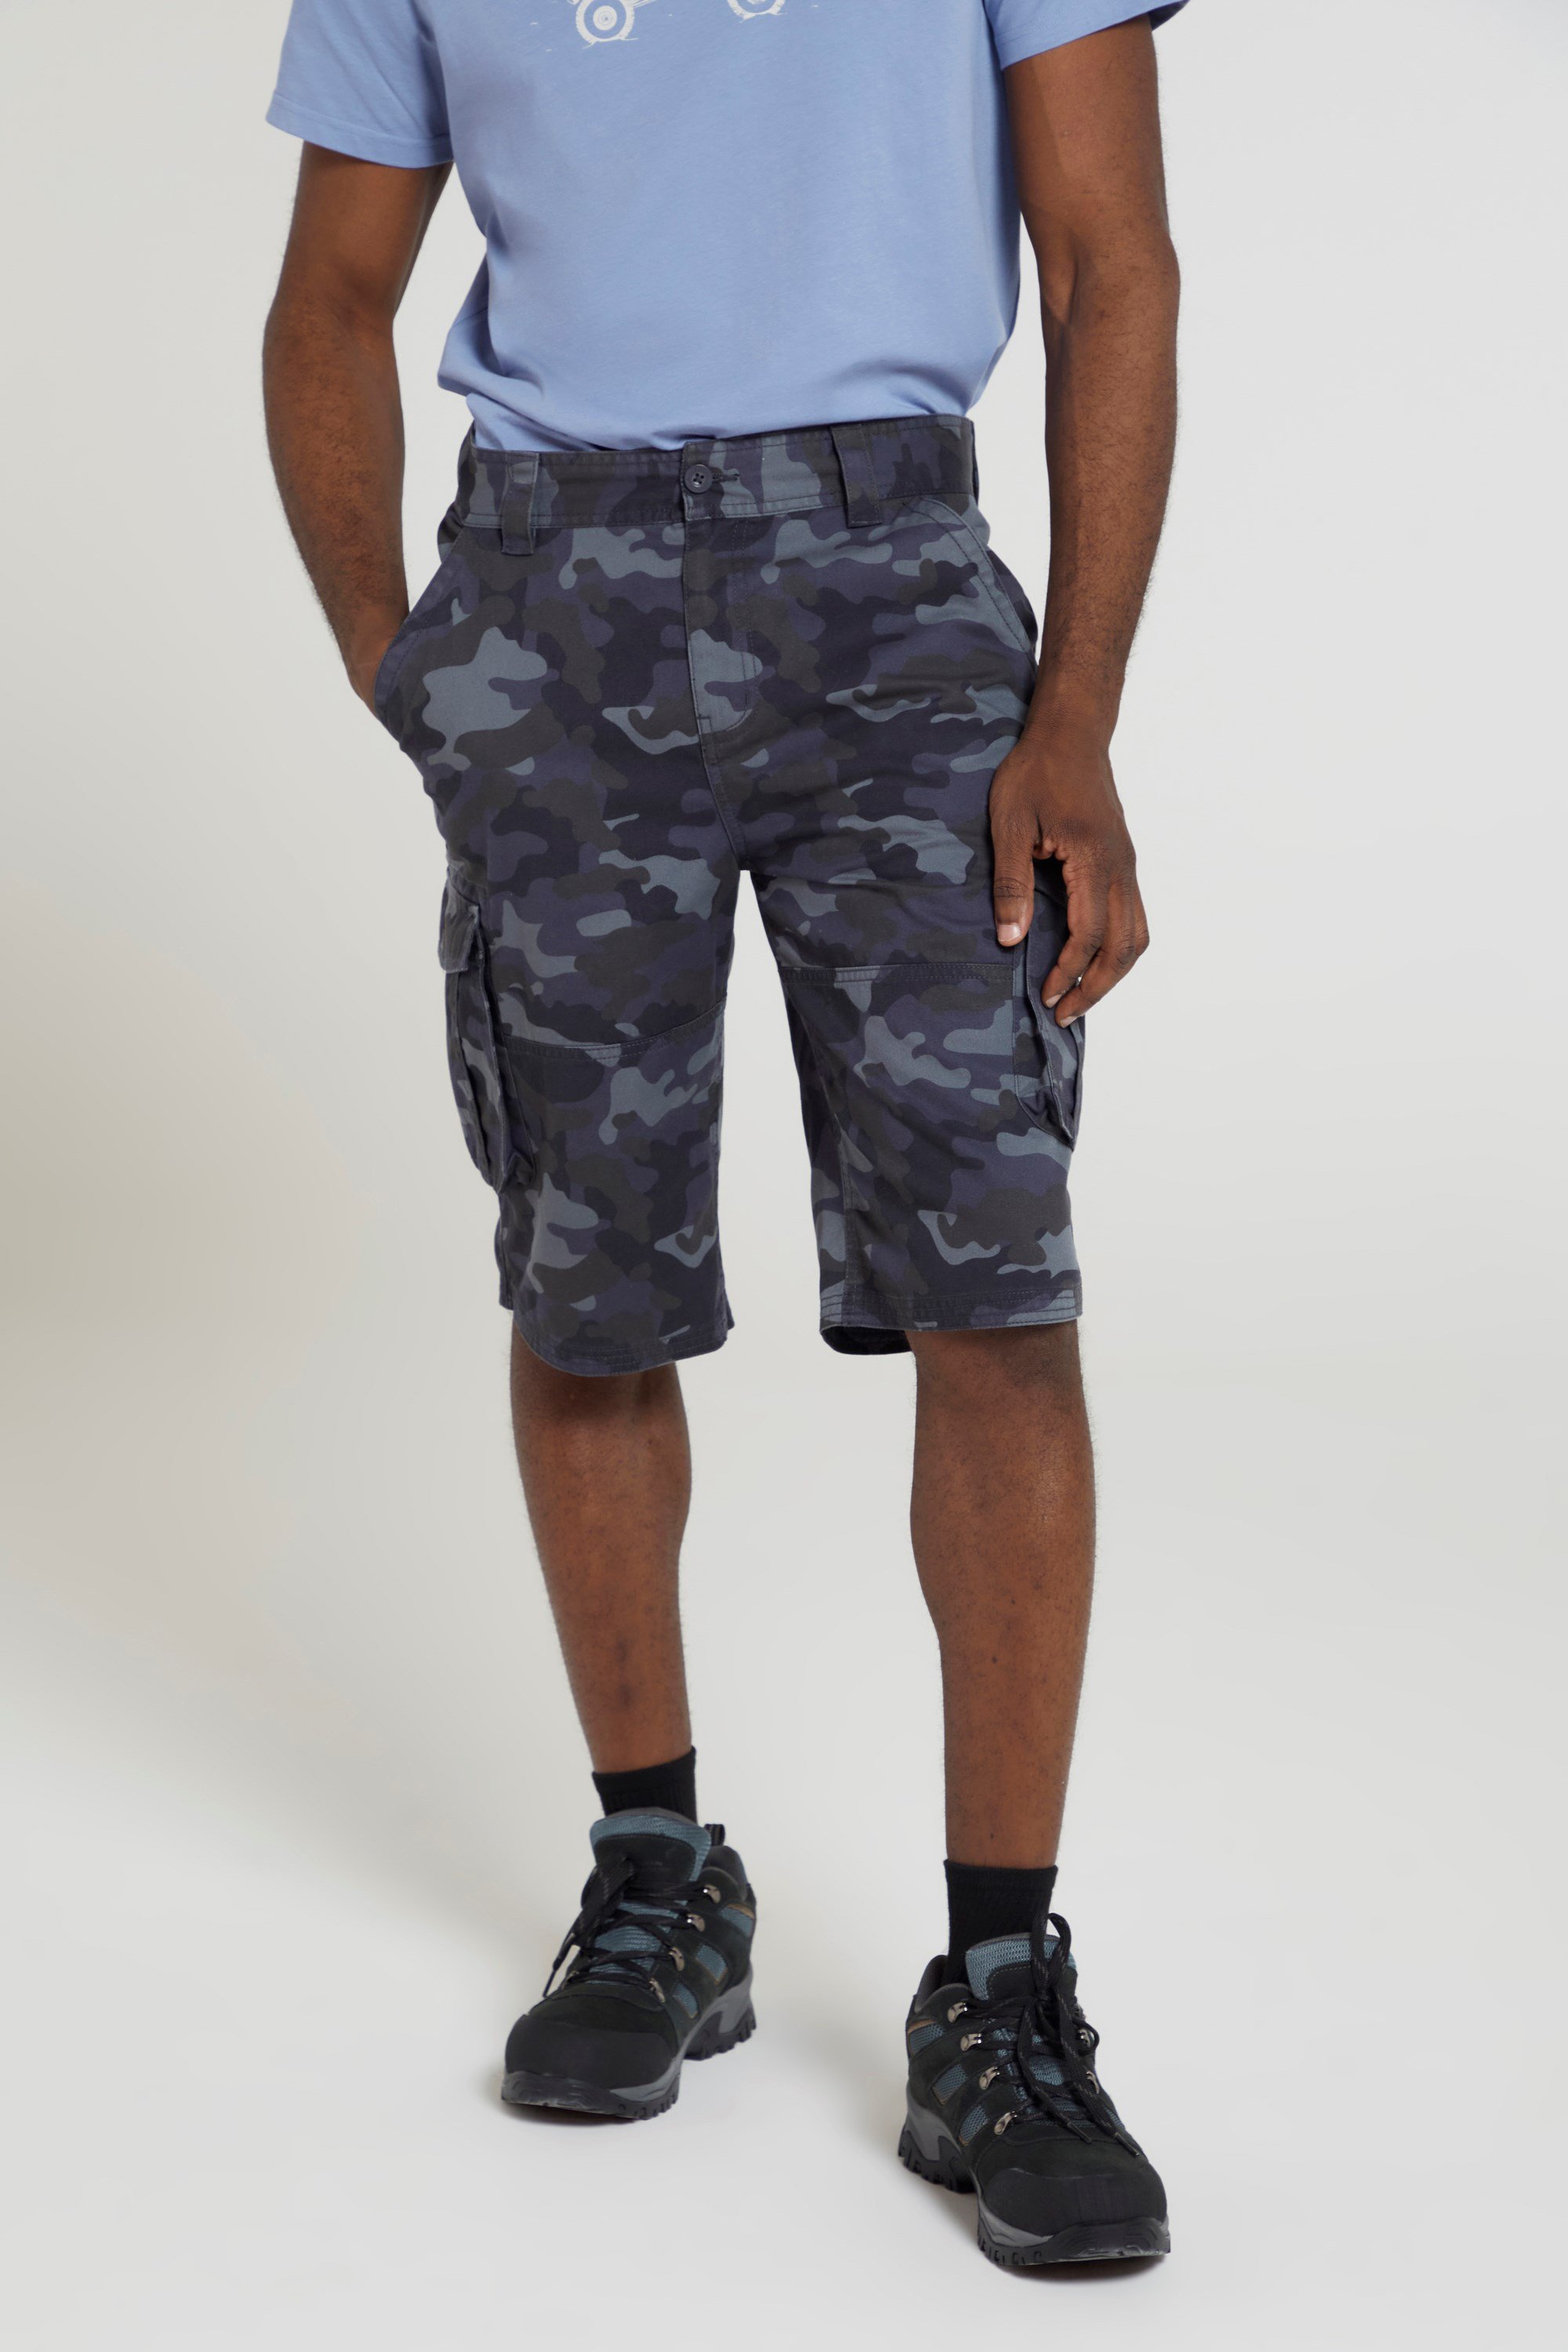 Mountain Warehouse Mens Camo Cargo Shorts - Blue | Size W28